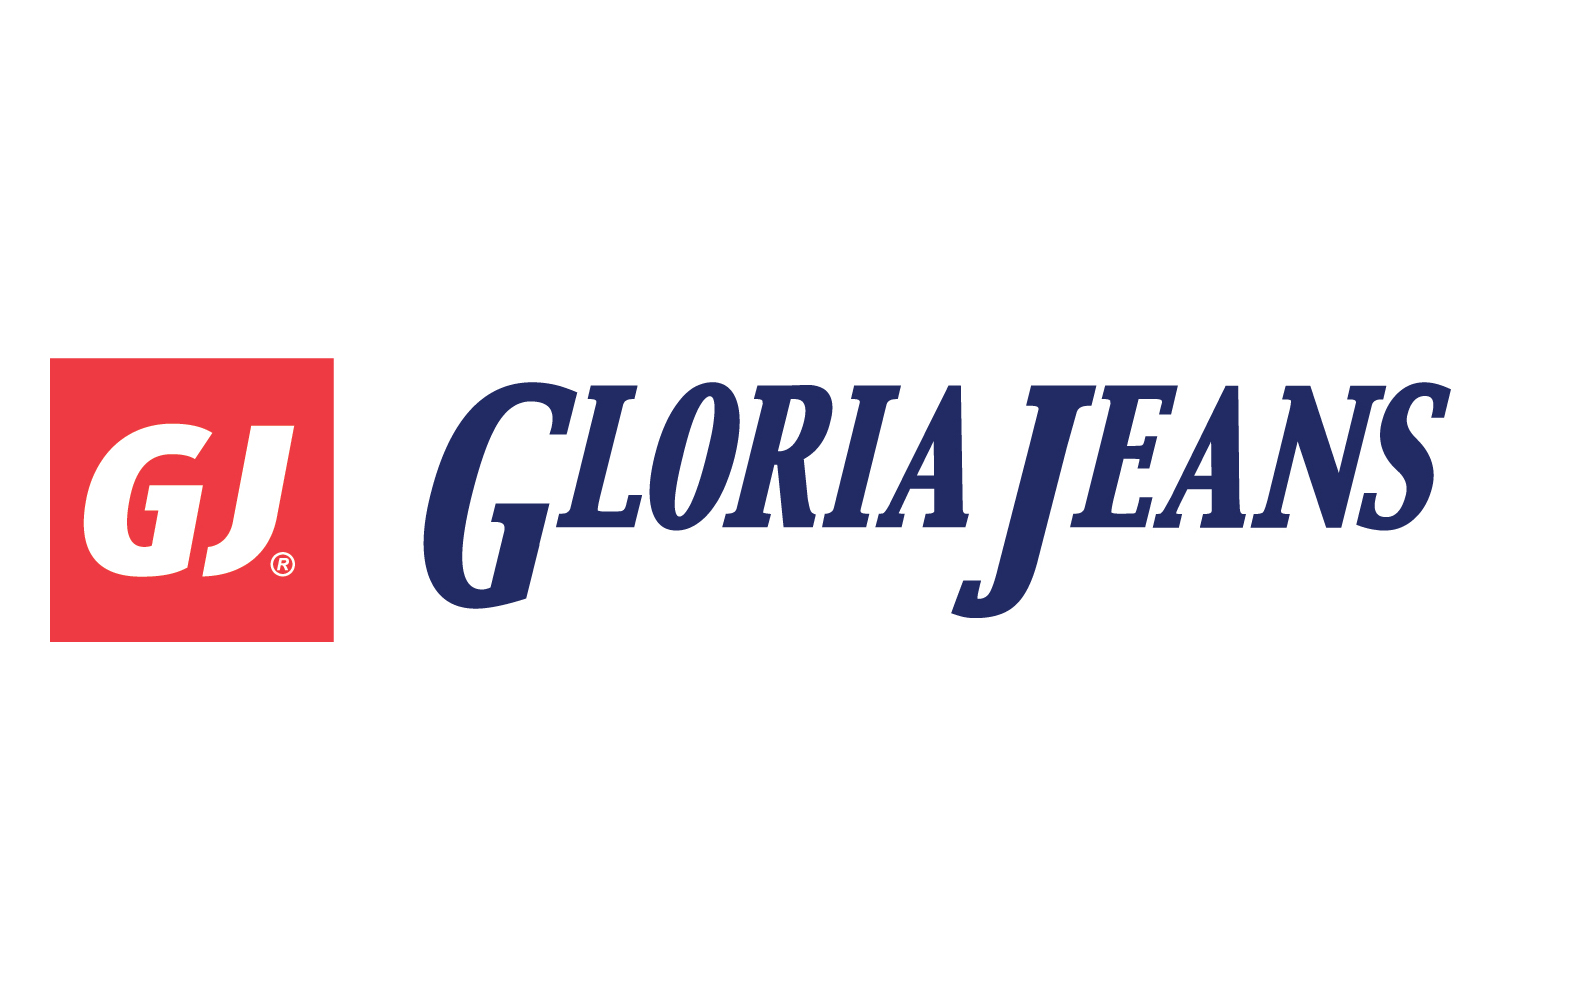  - 50%!  24.03! Gloria Jeans!  ! ,  , , , !   07/22